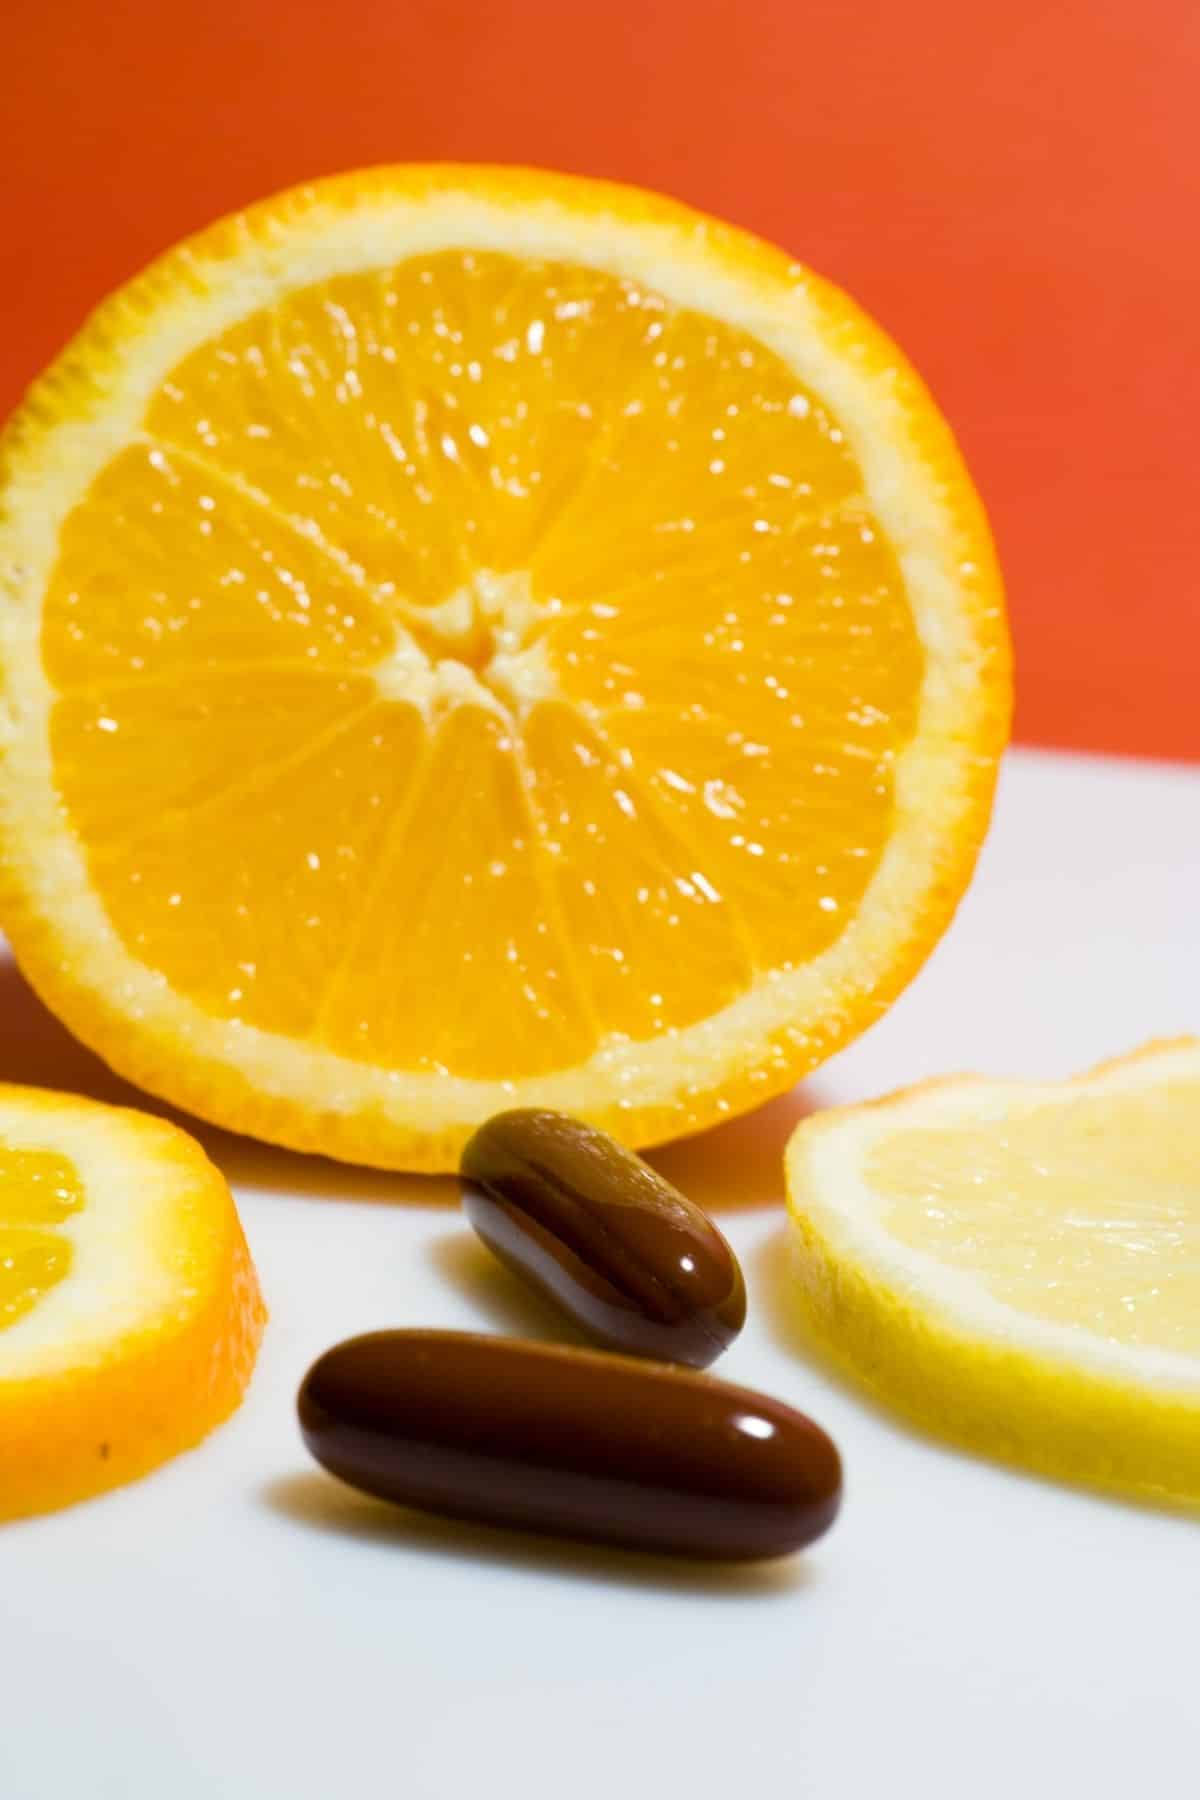 vitamin c capsules in front of a sliced orange.